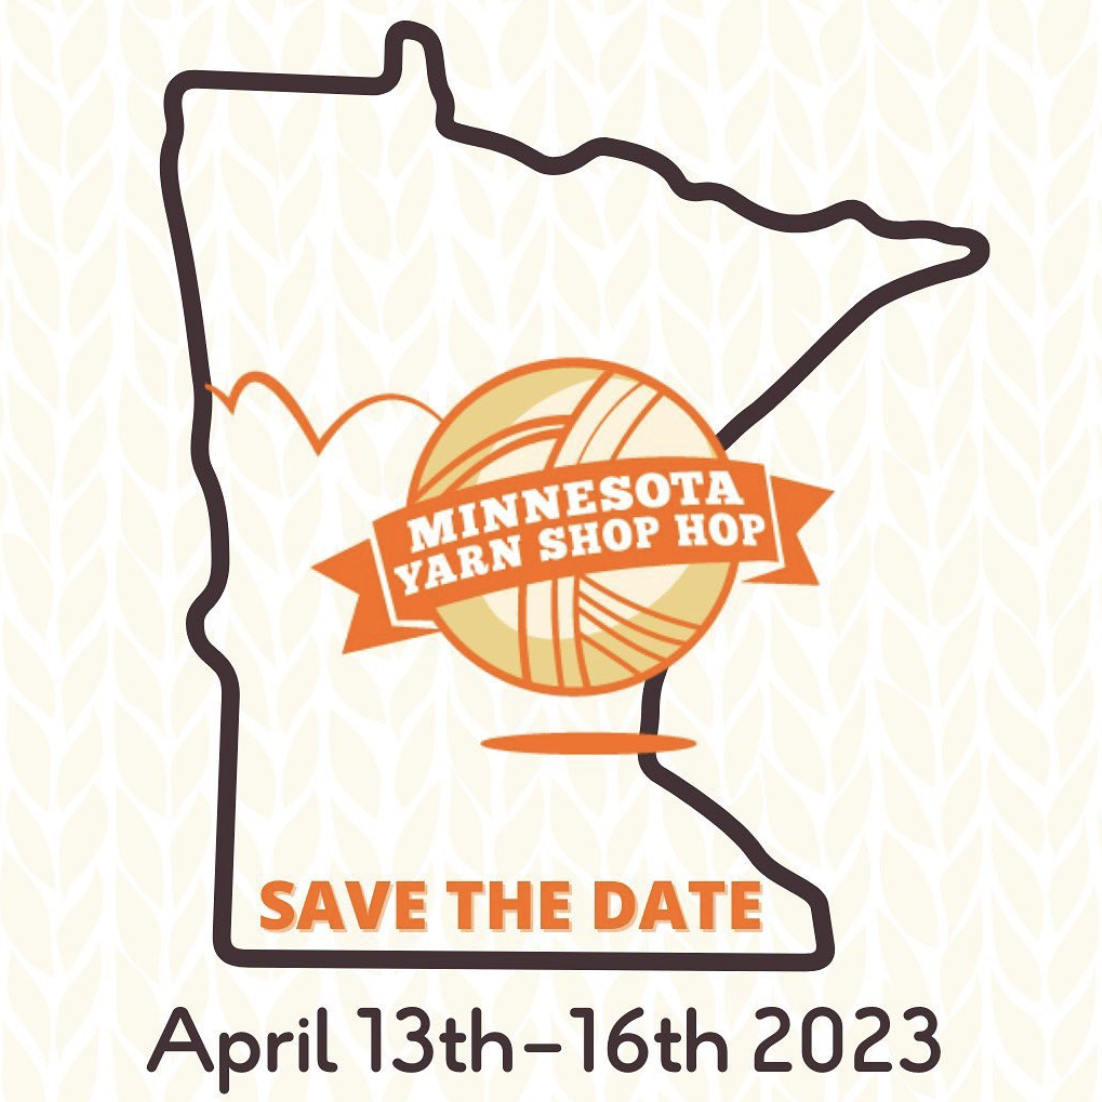 MN Yarn Shop Save the Date April 13 - 16, 2023